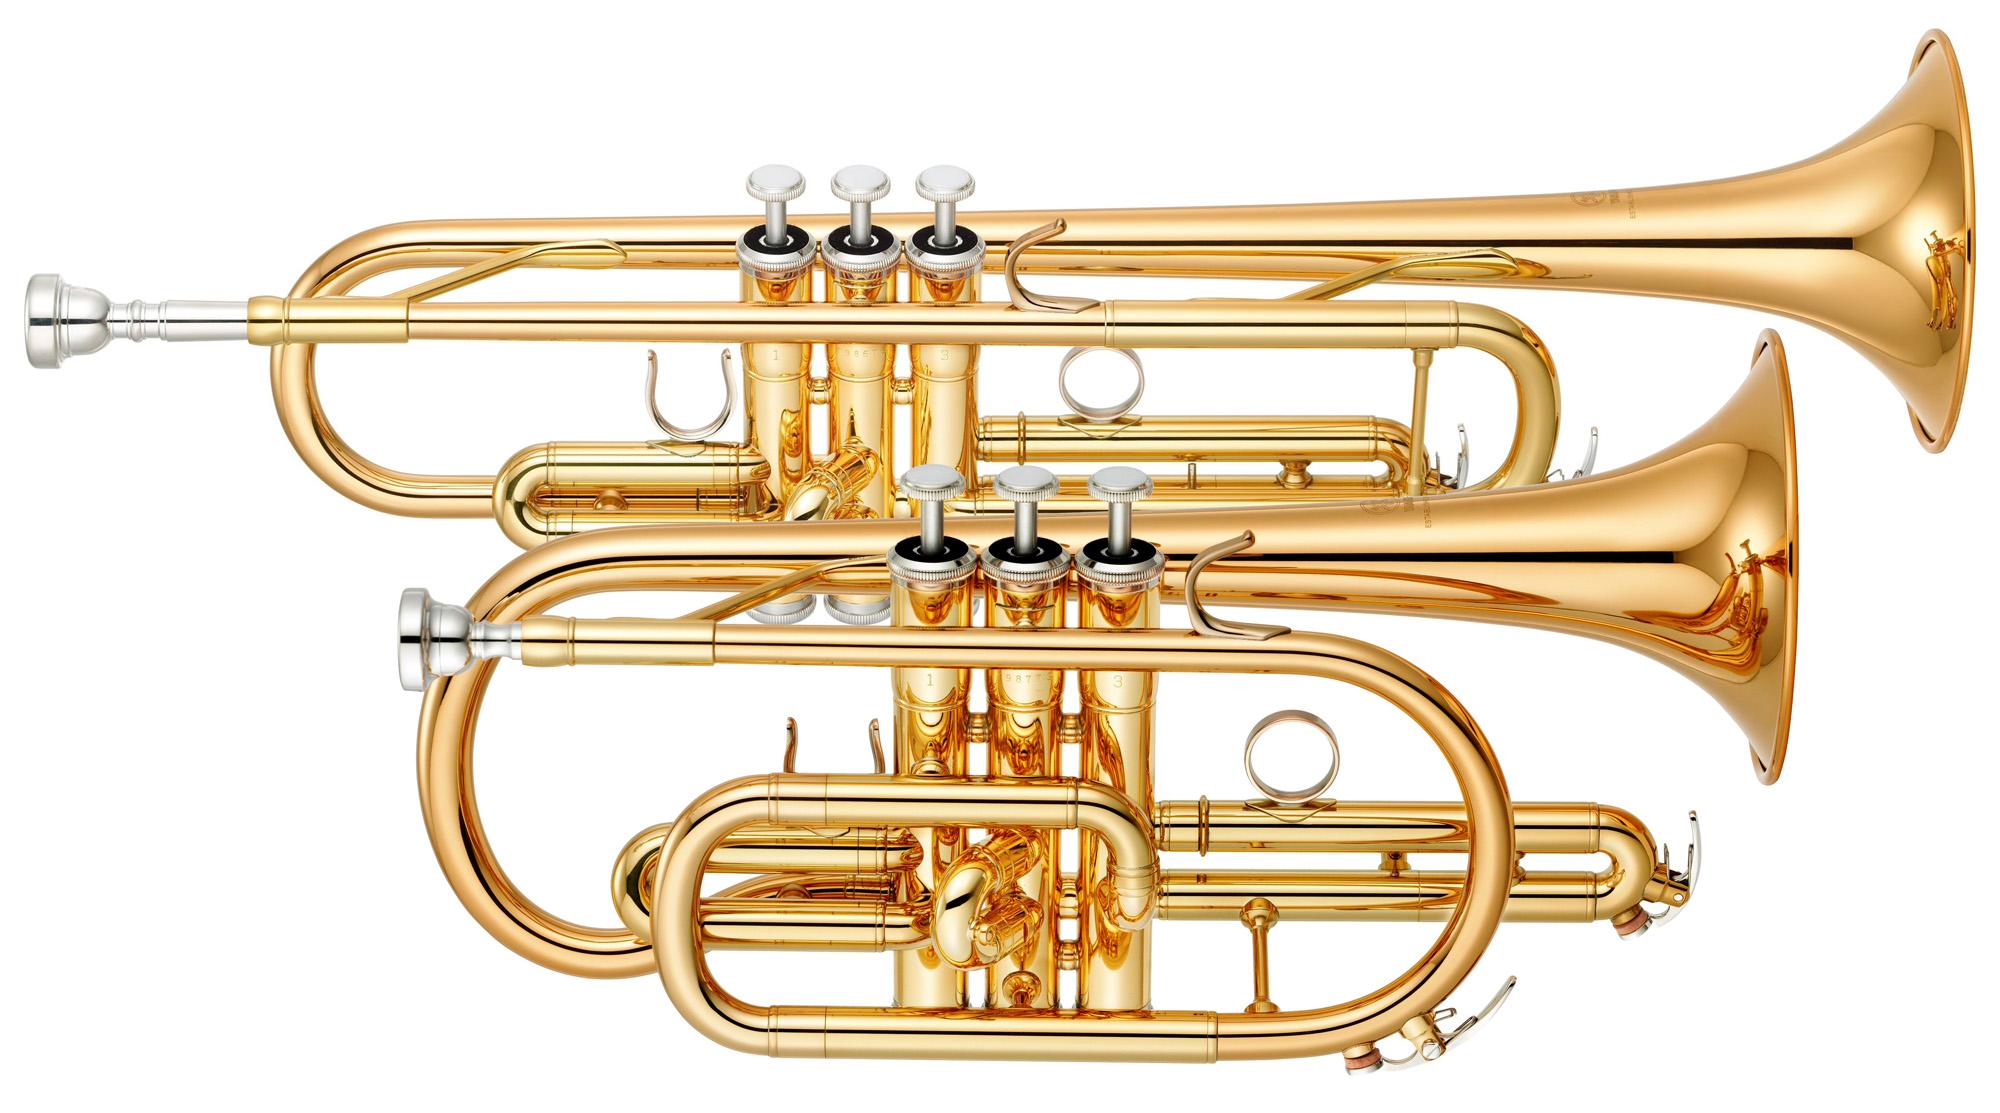 Photo of a Yamaha cornet alongside a Yamaha trumpet